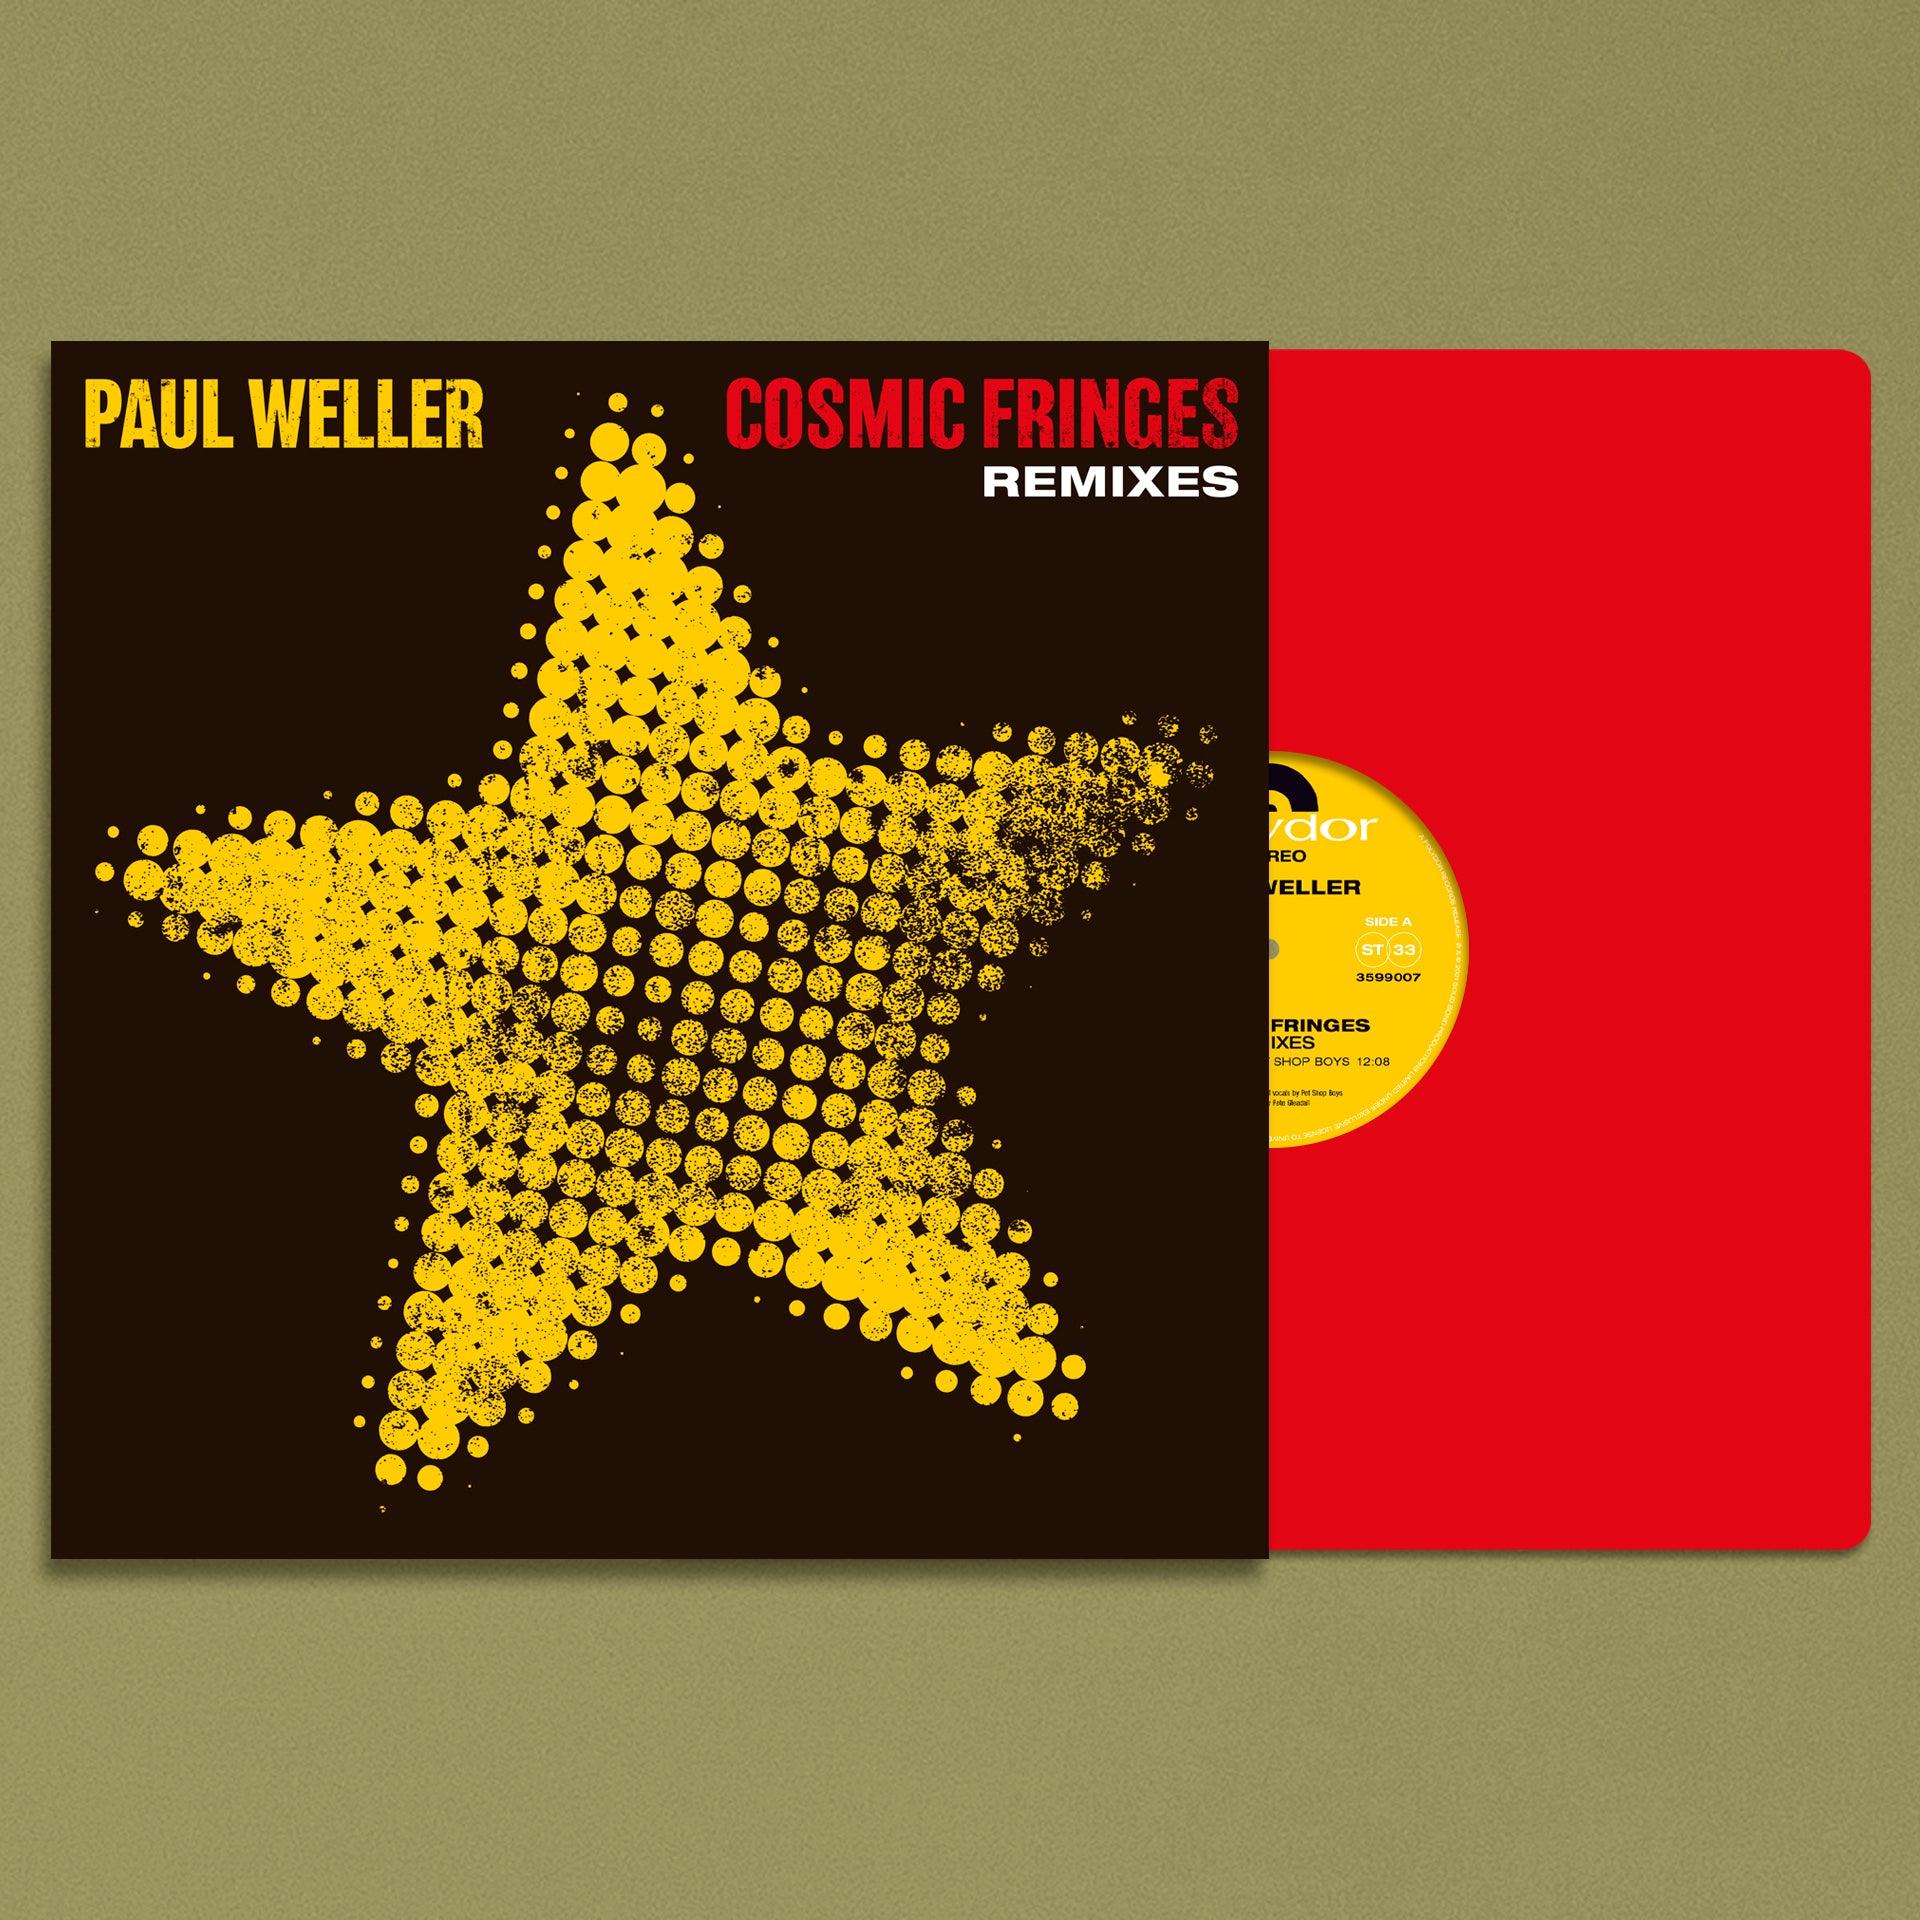 Paul Weller - Cosmic Fringes - 12" HEAVYWEIGHT VINYL